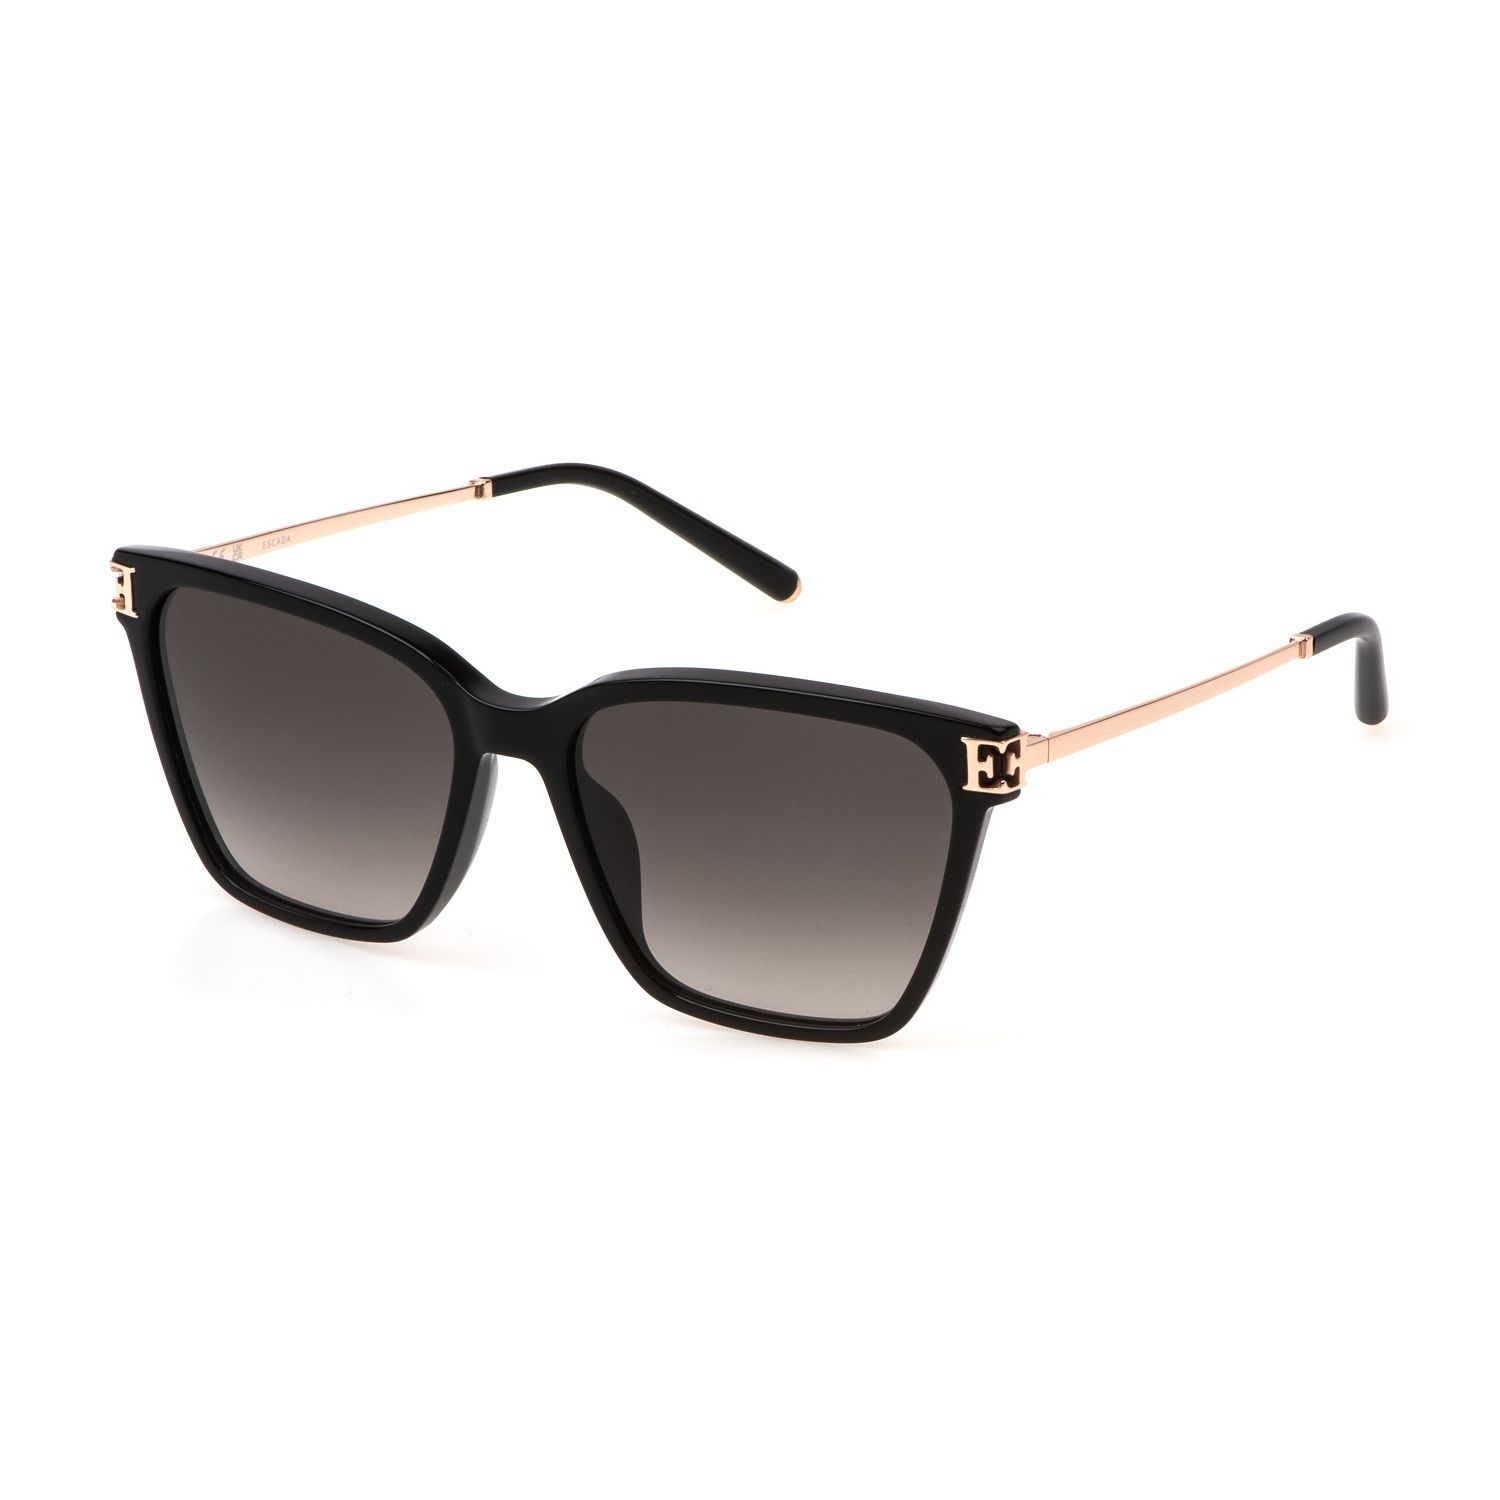 SESE47 Square Sunglasses 0700 - size 55